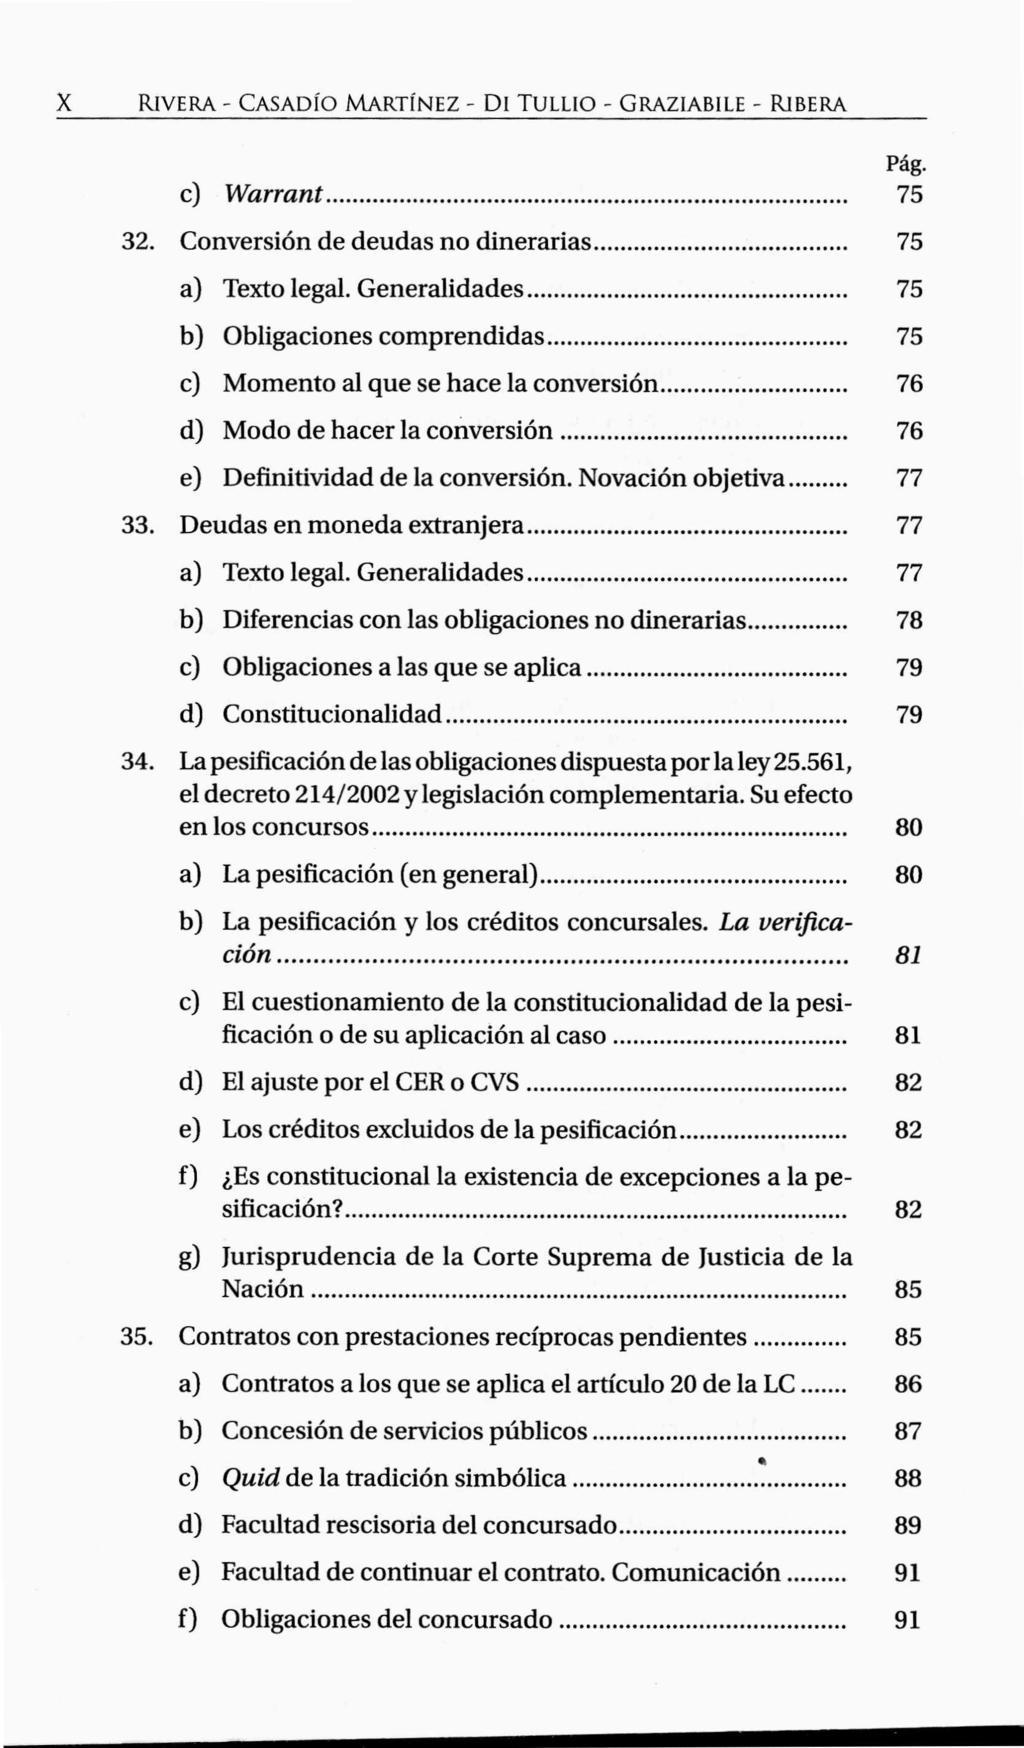 X RIVERA - CASADÍO MARTÍNEZ - DI TULLIO - GRAZIABILE - RIBERA C) Warrant 75 32. Conversión de deudas no dinerarias 75 a) Texto legal.